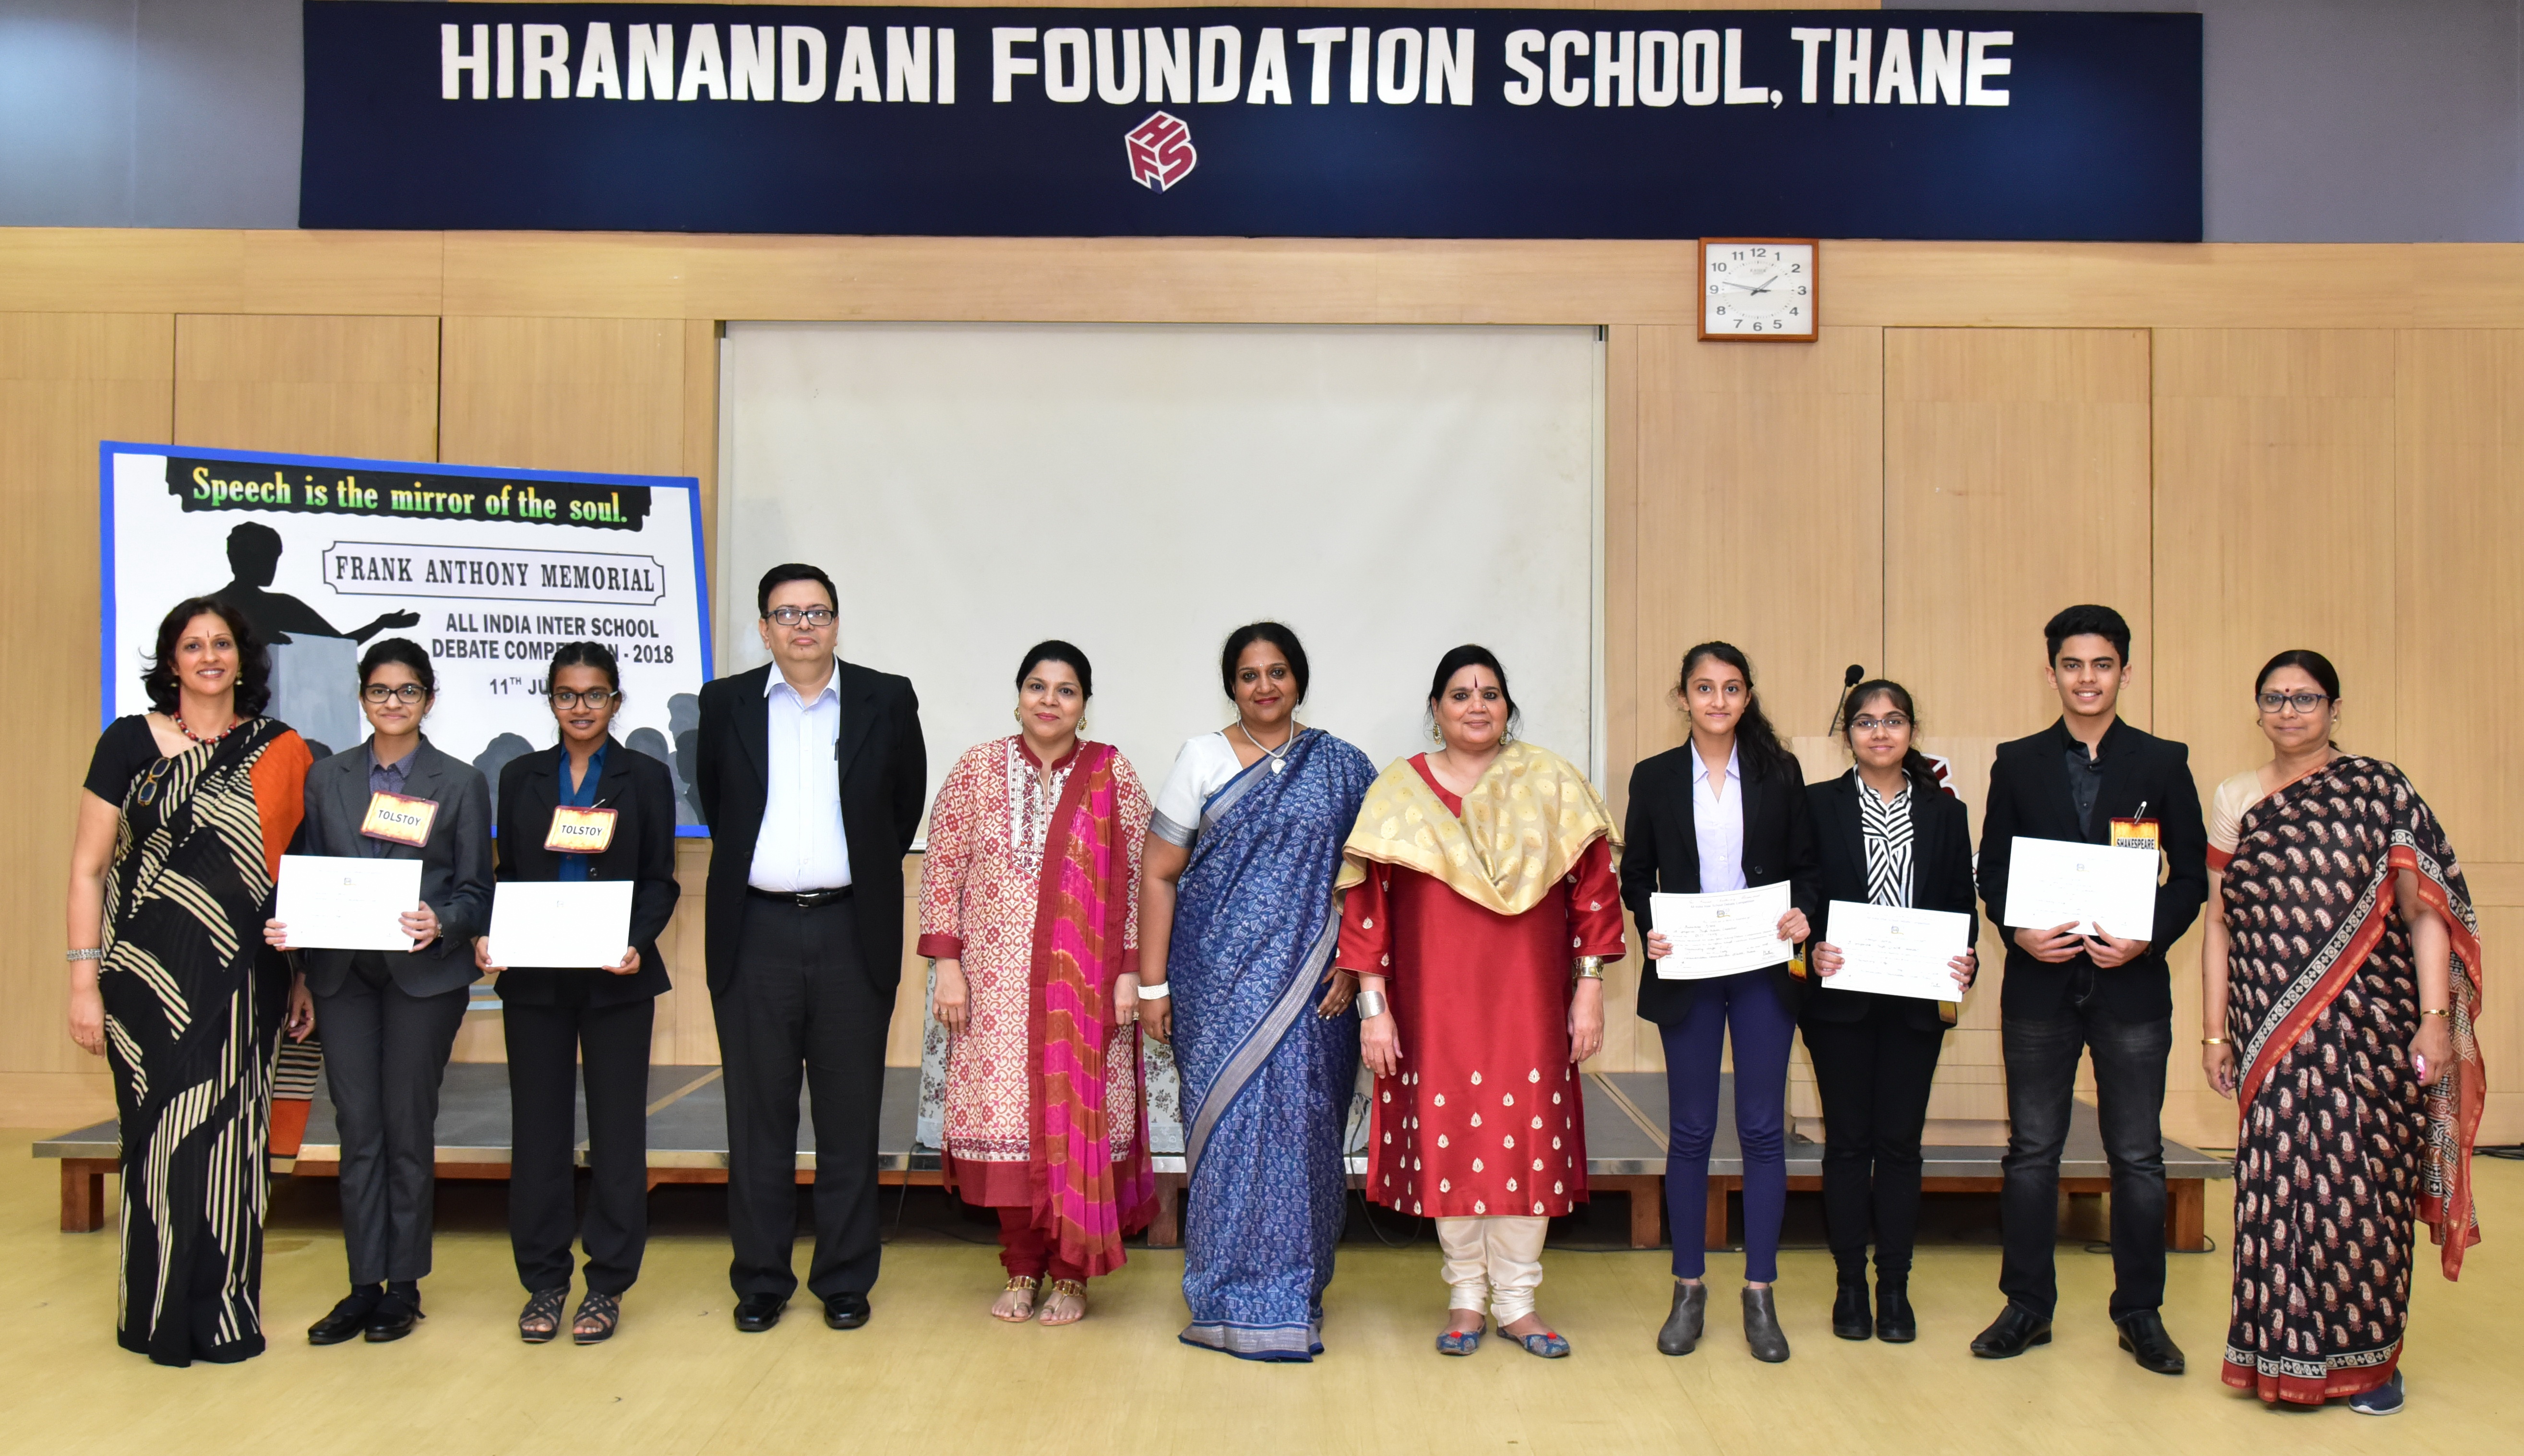 Hiranandani Foundation School thane